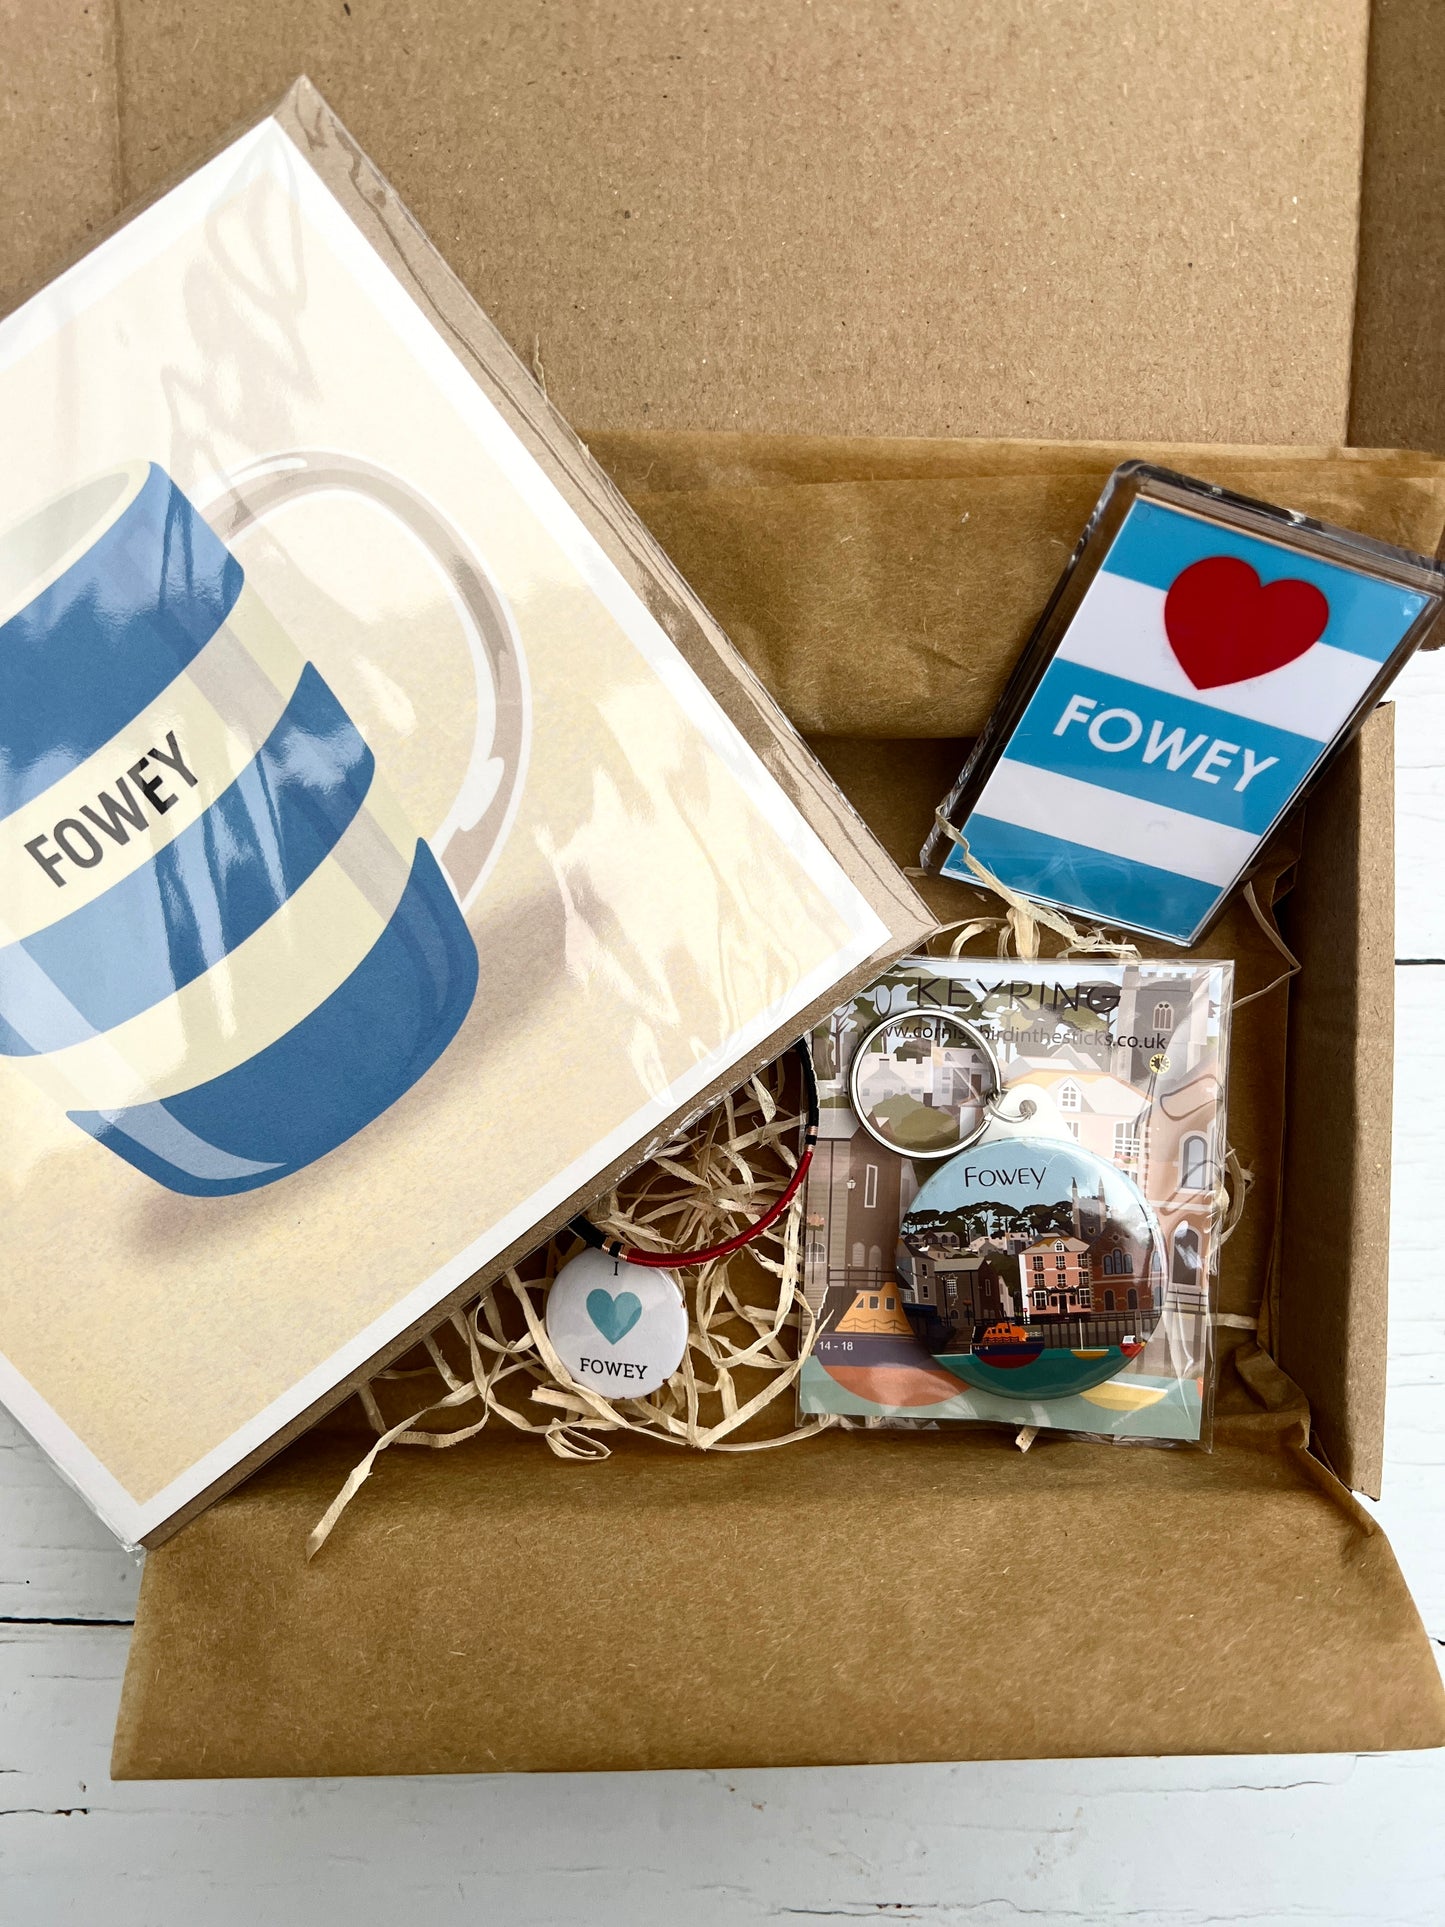 Fowey Joy Gift Box, from Cornwall with love